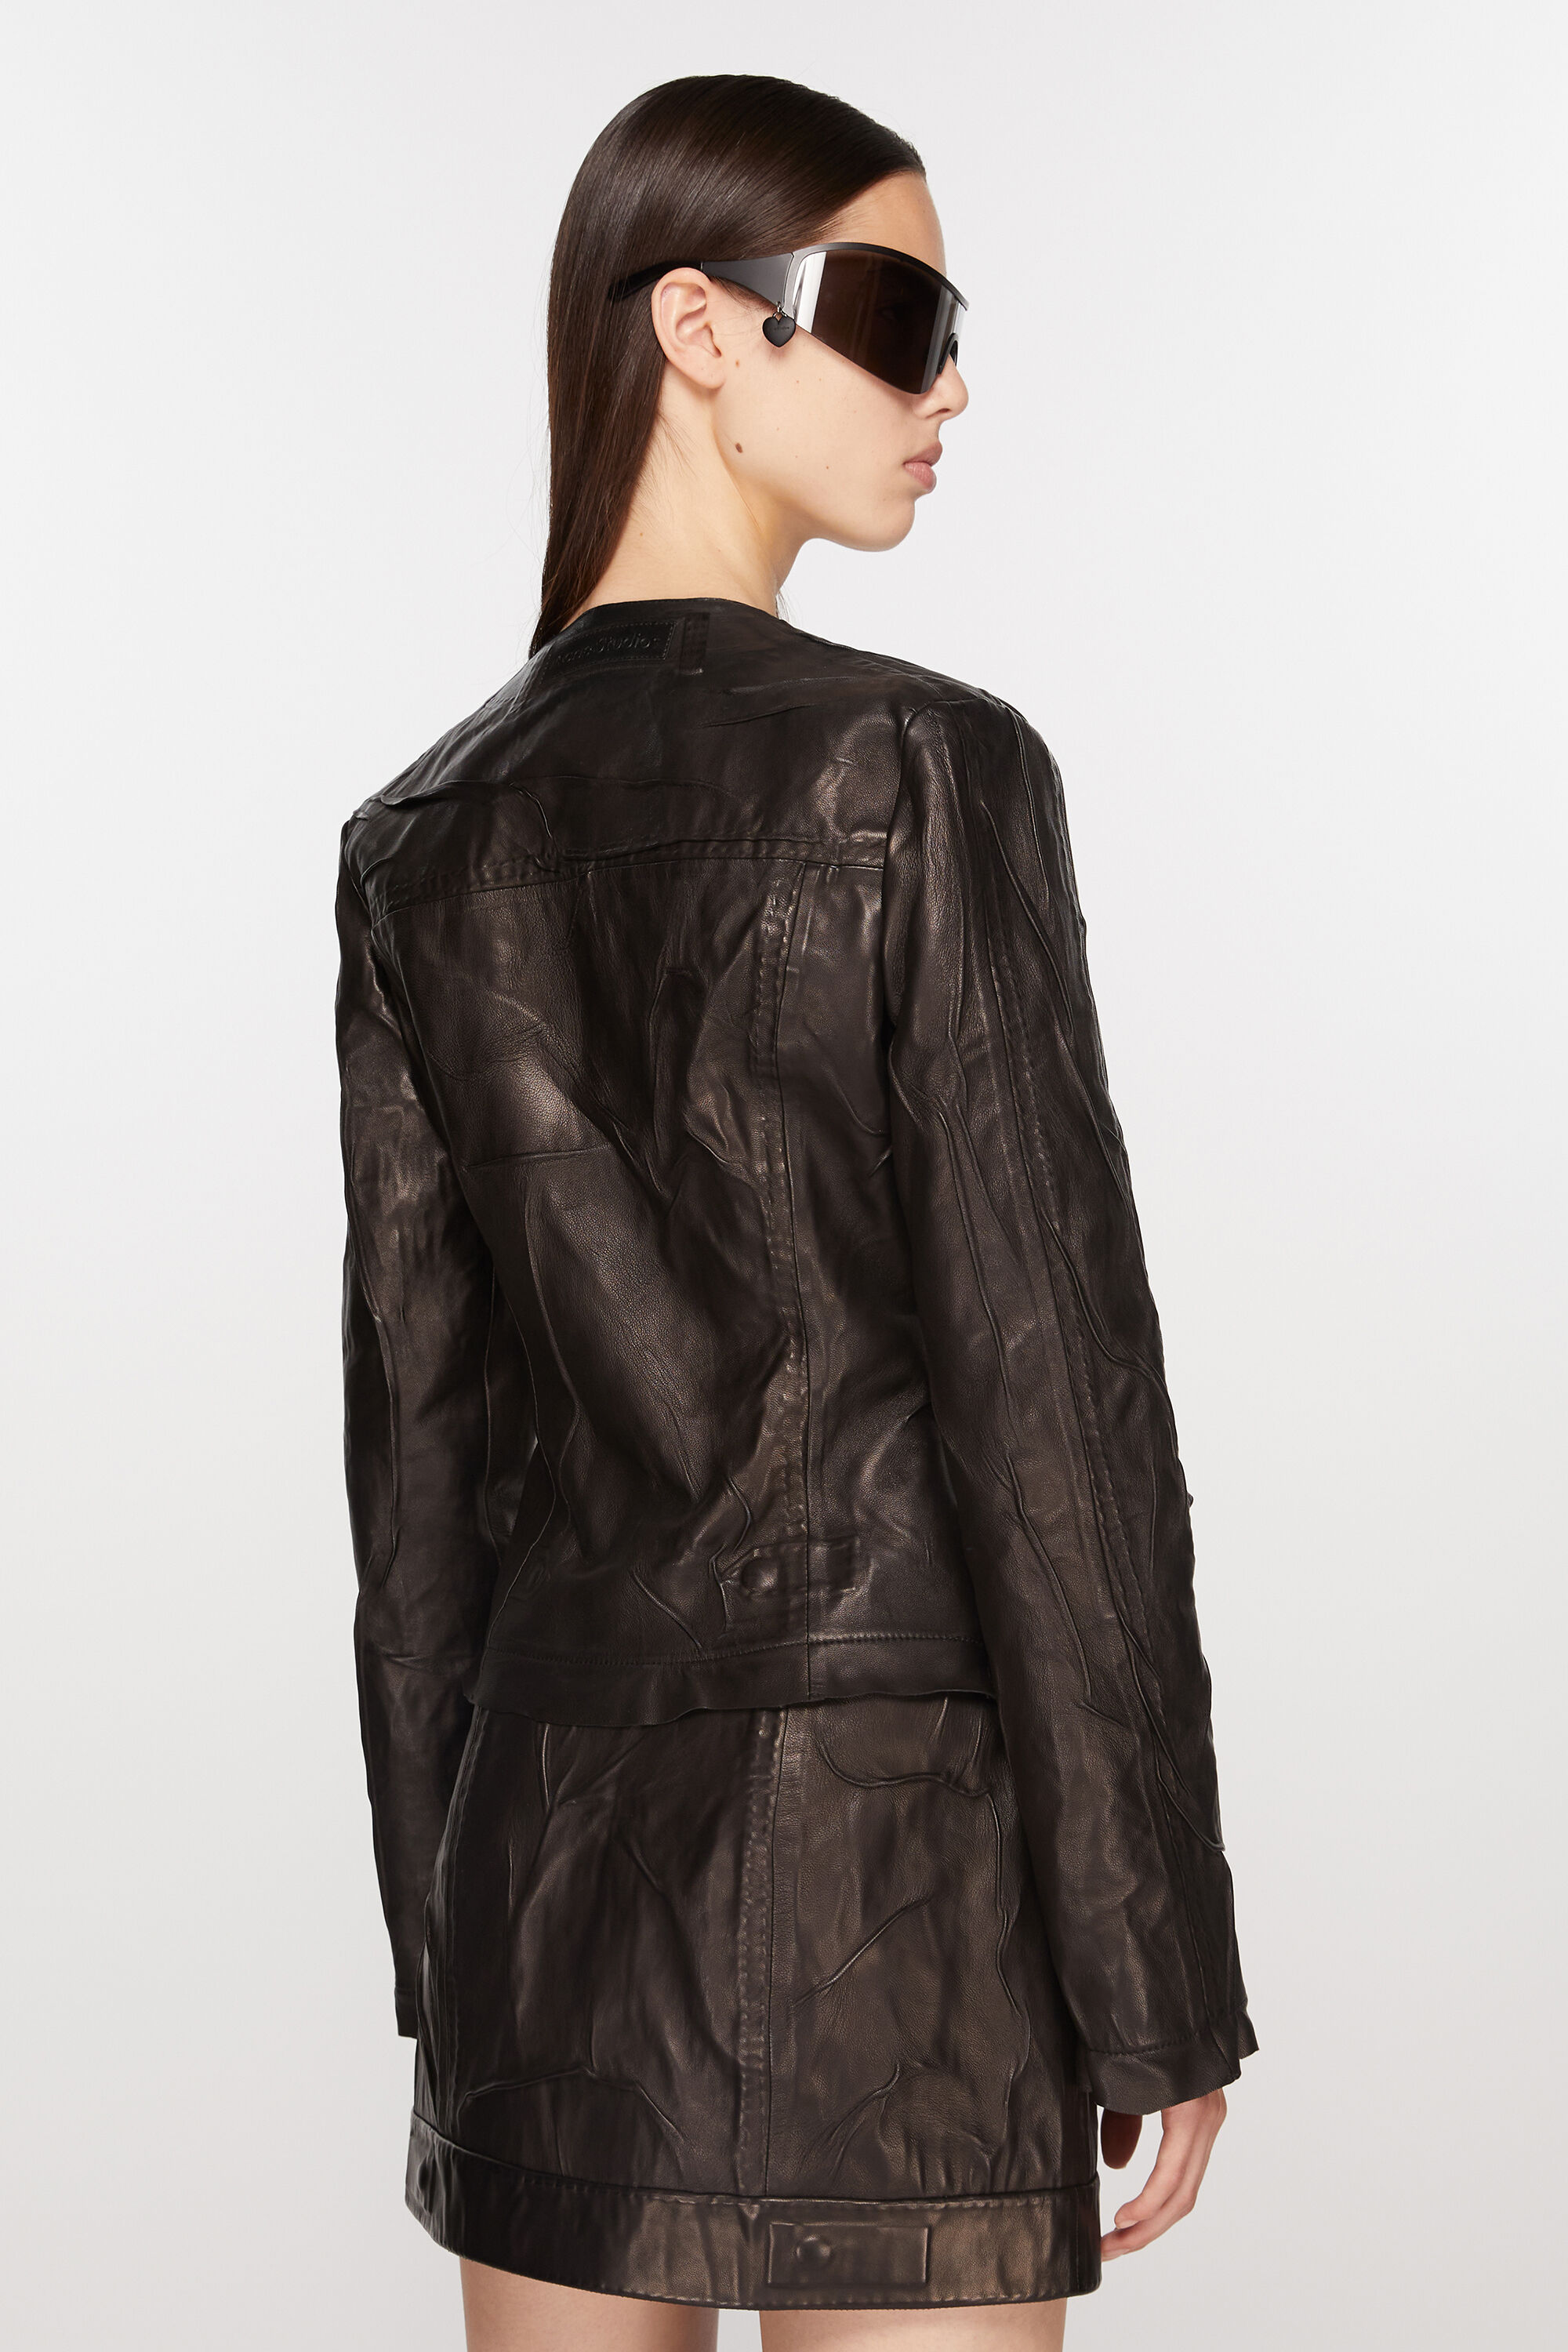 Creased leather jacket